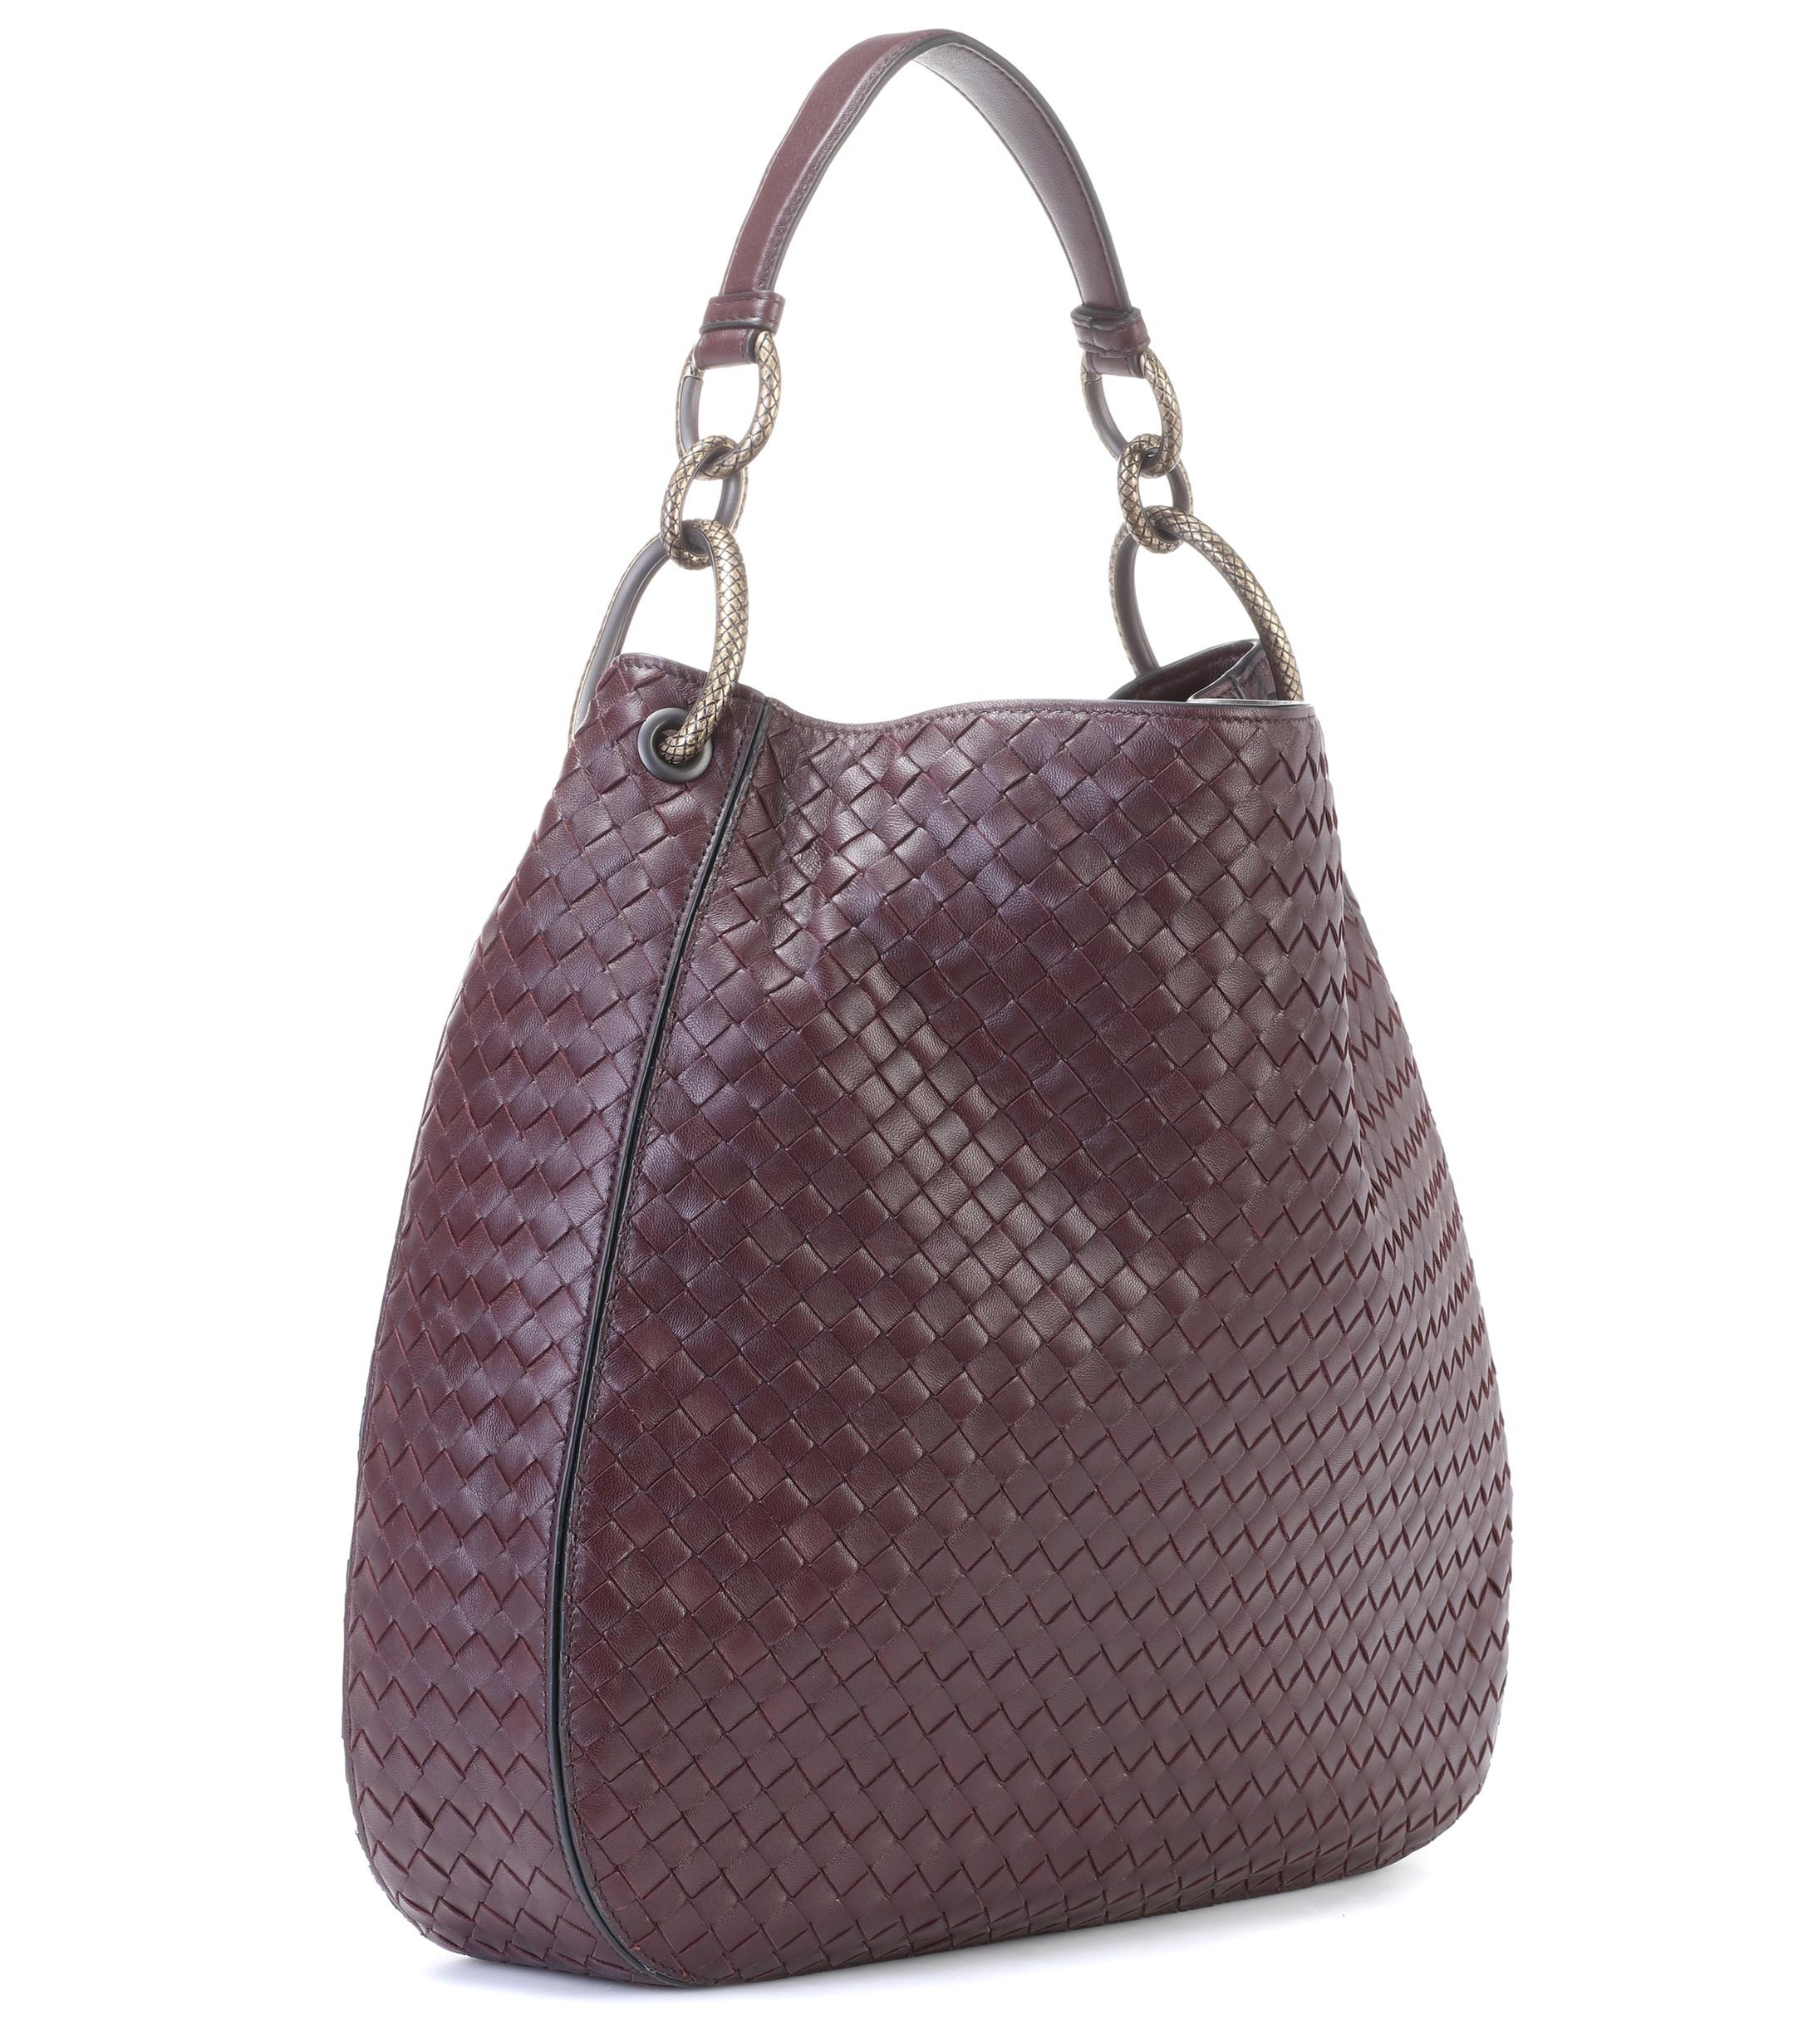 Bottega Veneta Loop Intrecciato Leather Shoulder Bag in Purple - Lyst